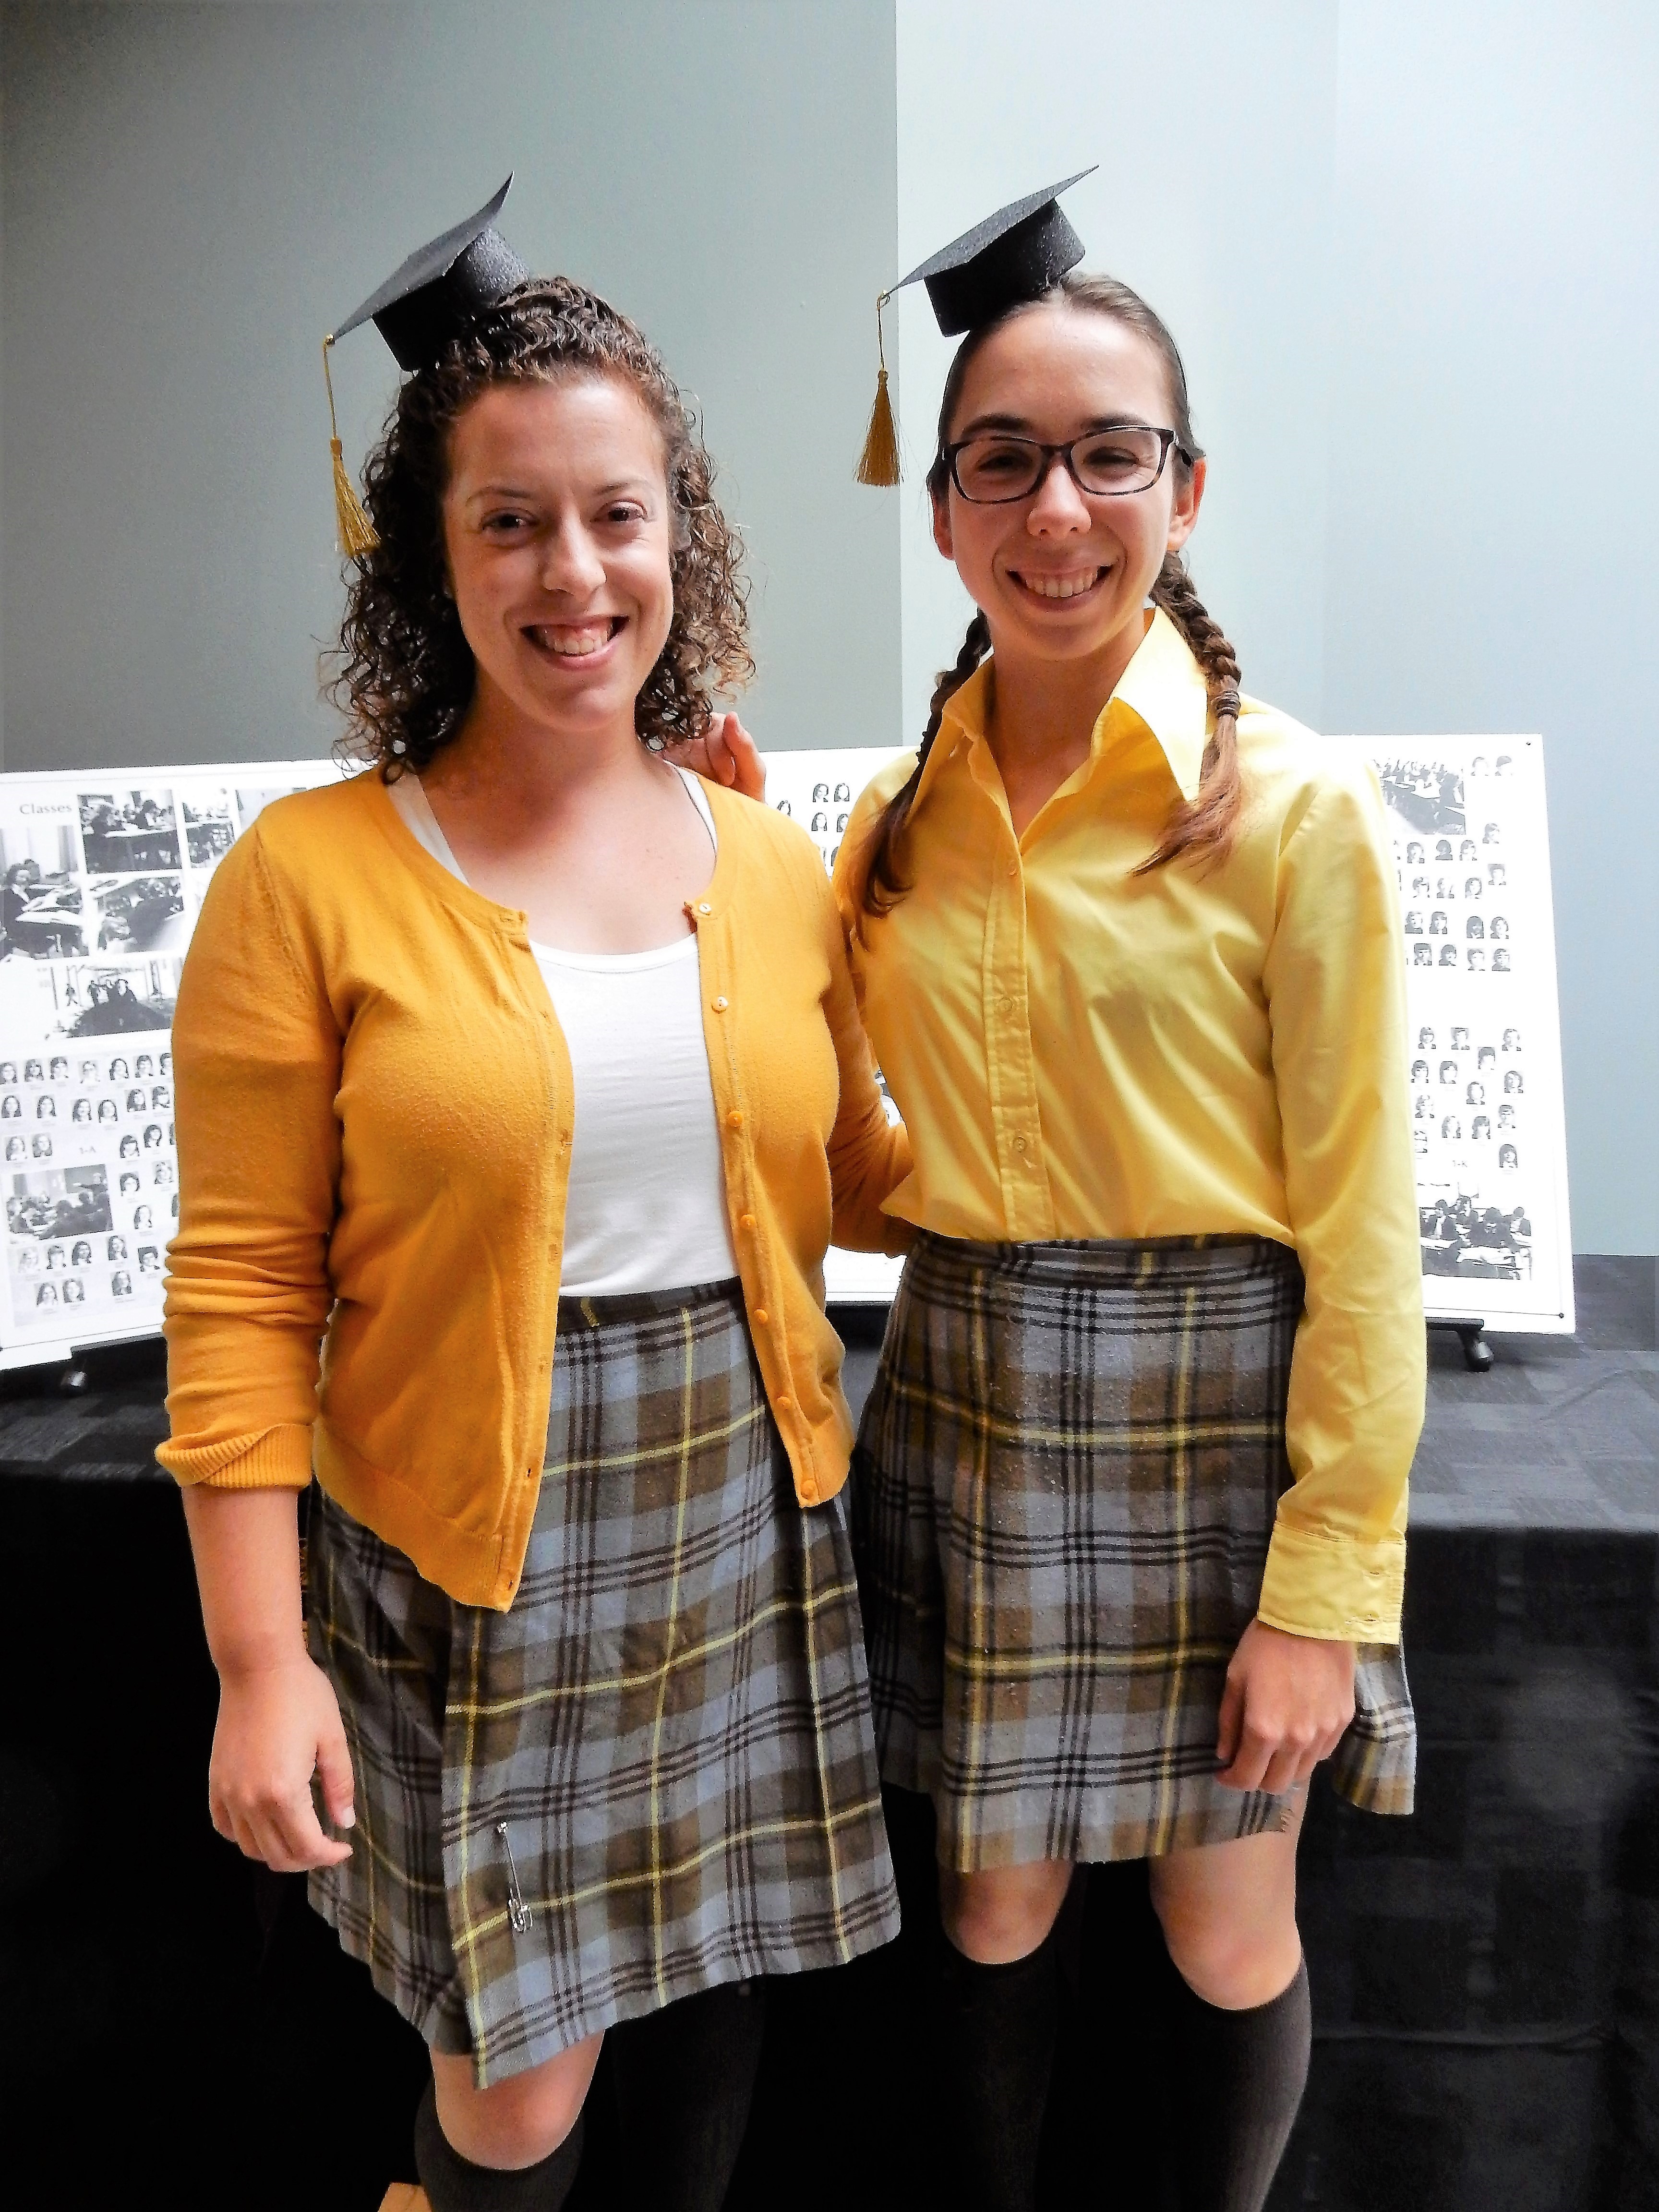 Rachel & Lindsay, our registration ladies...decked out in authentic St. Joe's uniforms!